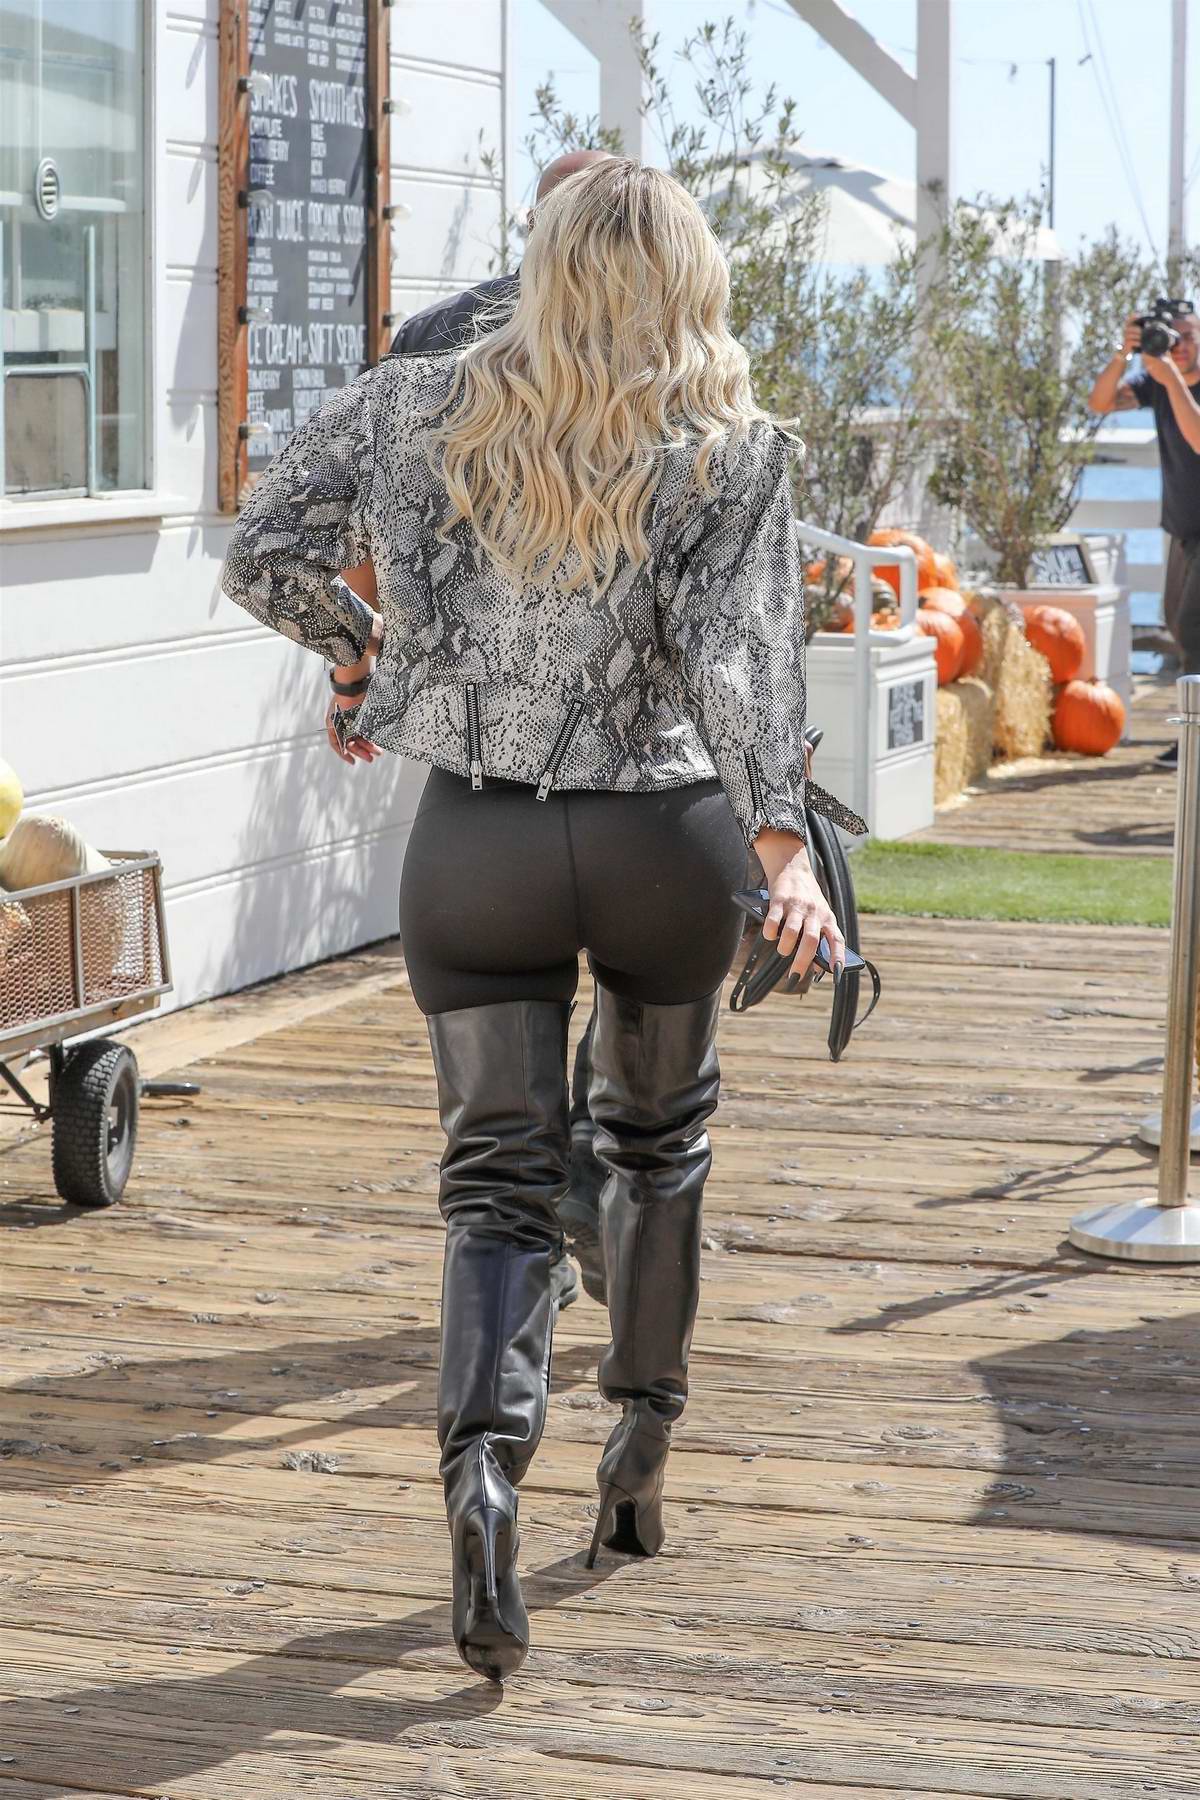 khloe kardashian wears snakeskin jacket with black leggings and thigh